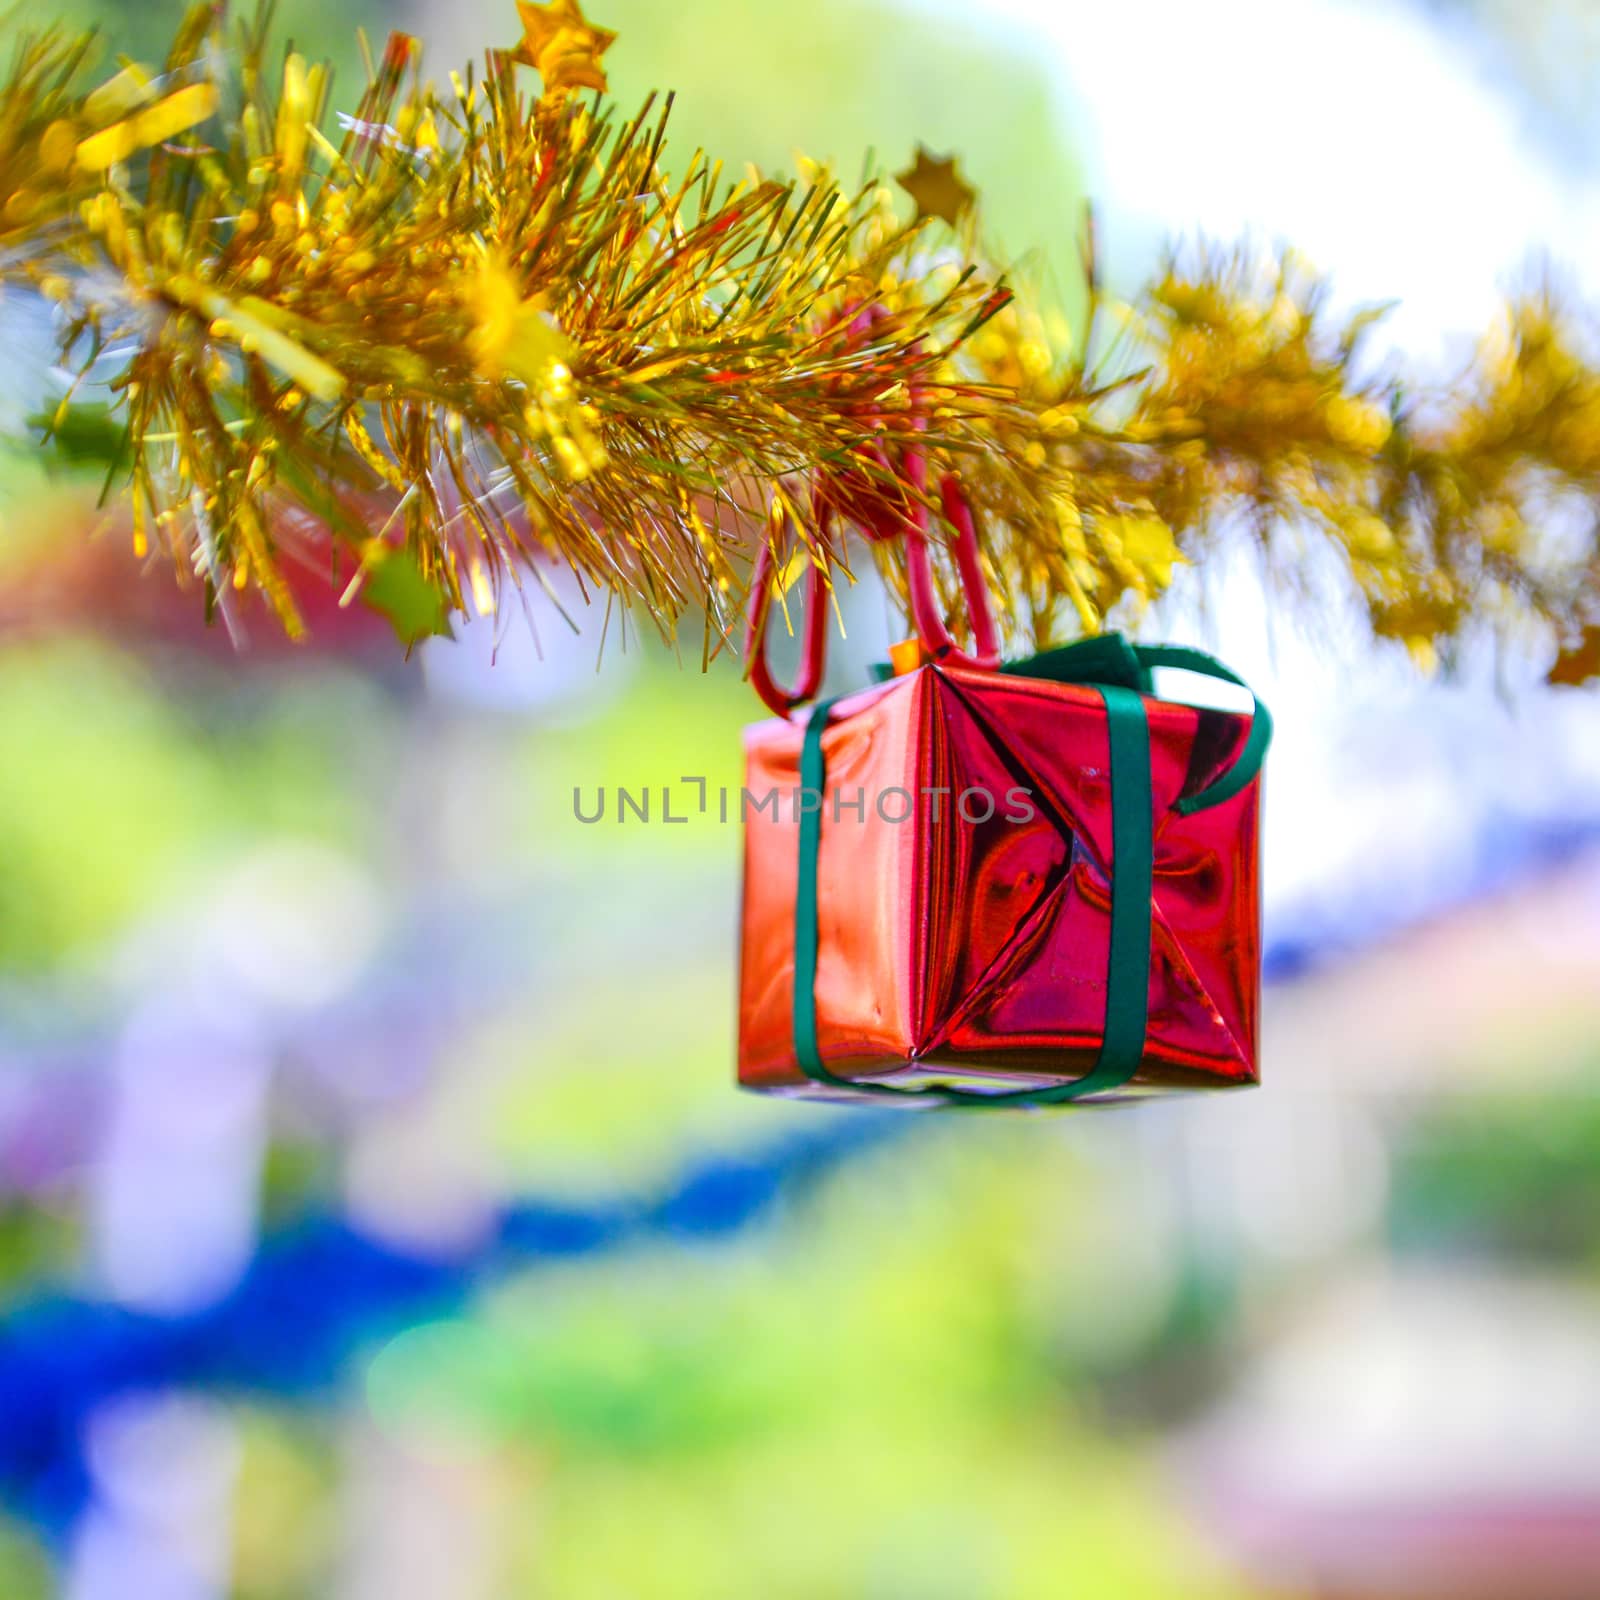 Closeup red gift box by opasstudio